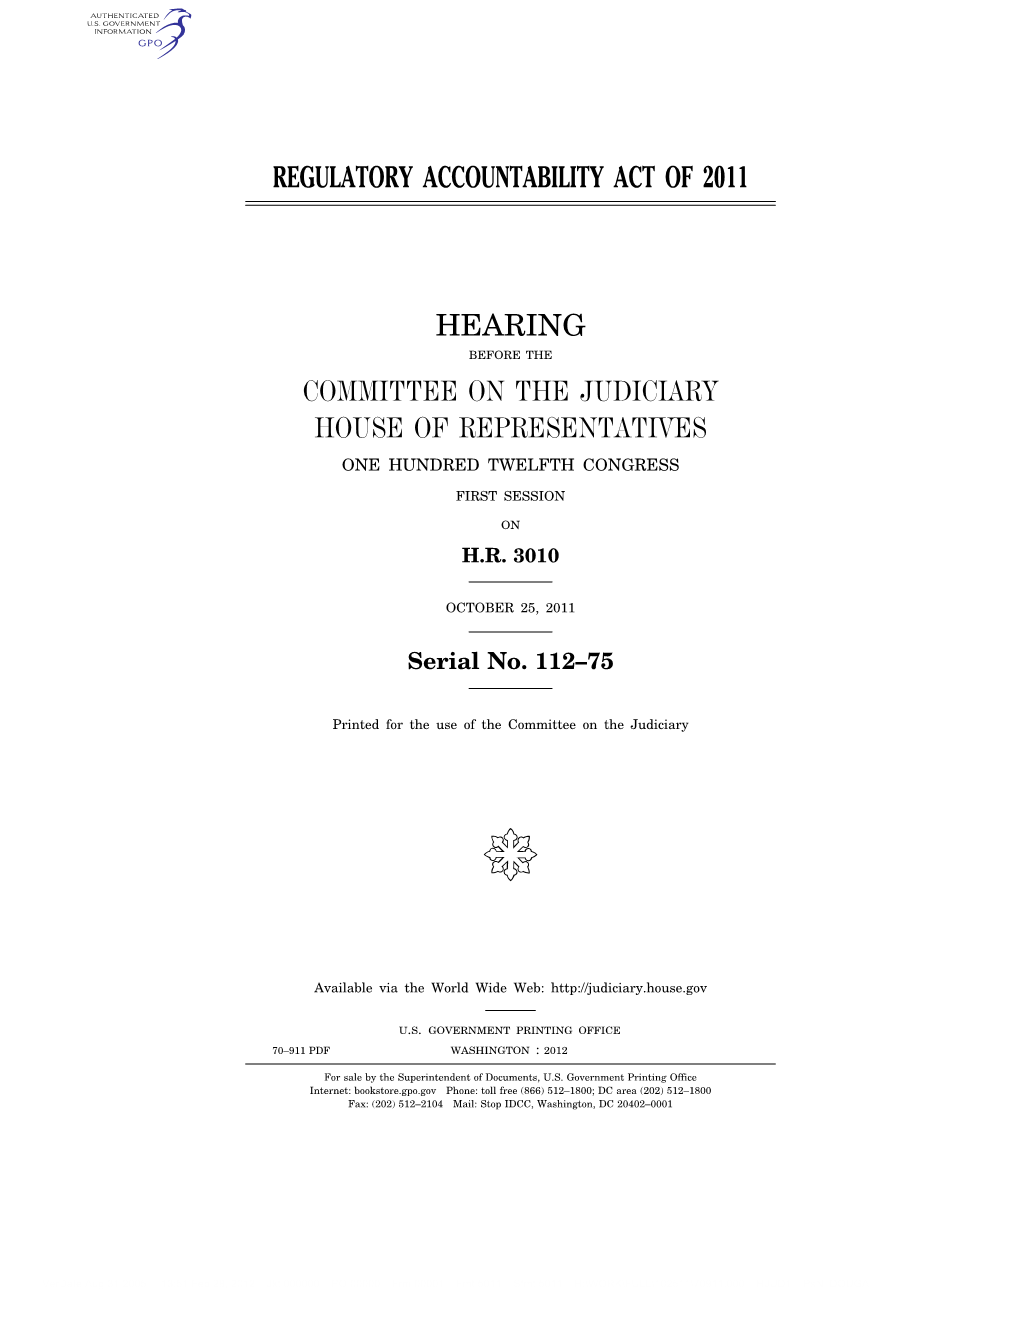 Regulatory Accountability Act of 2011 Hearing